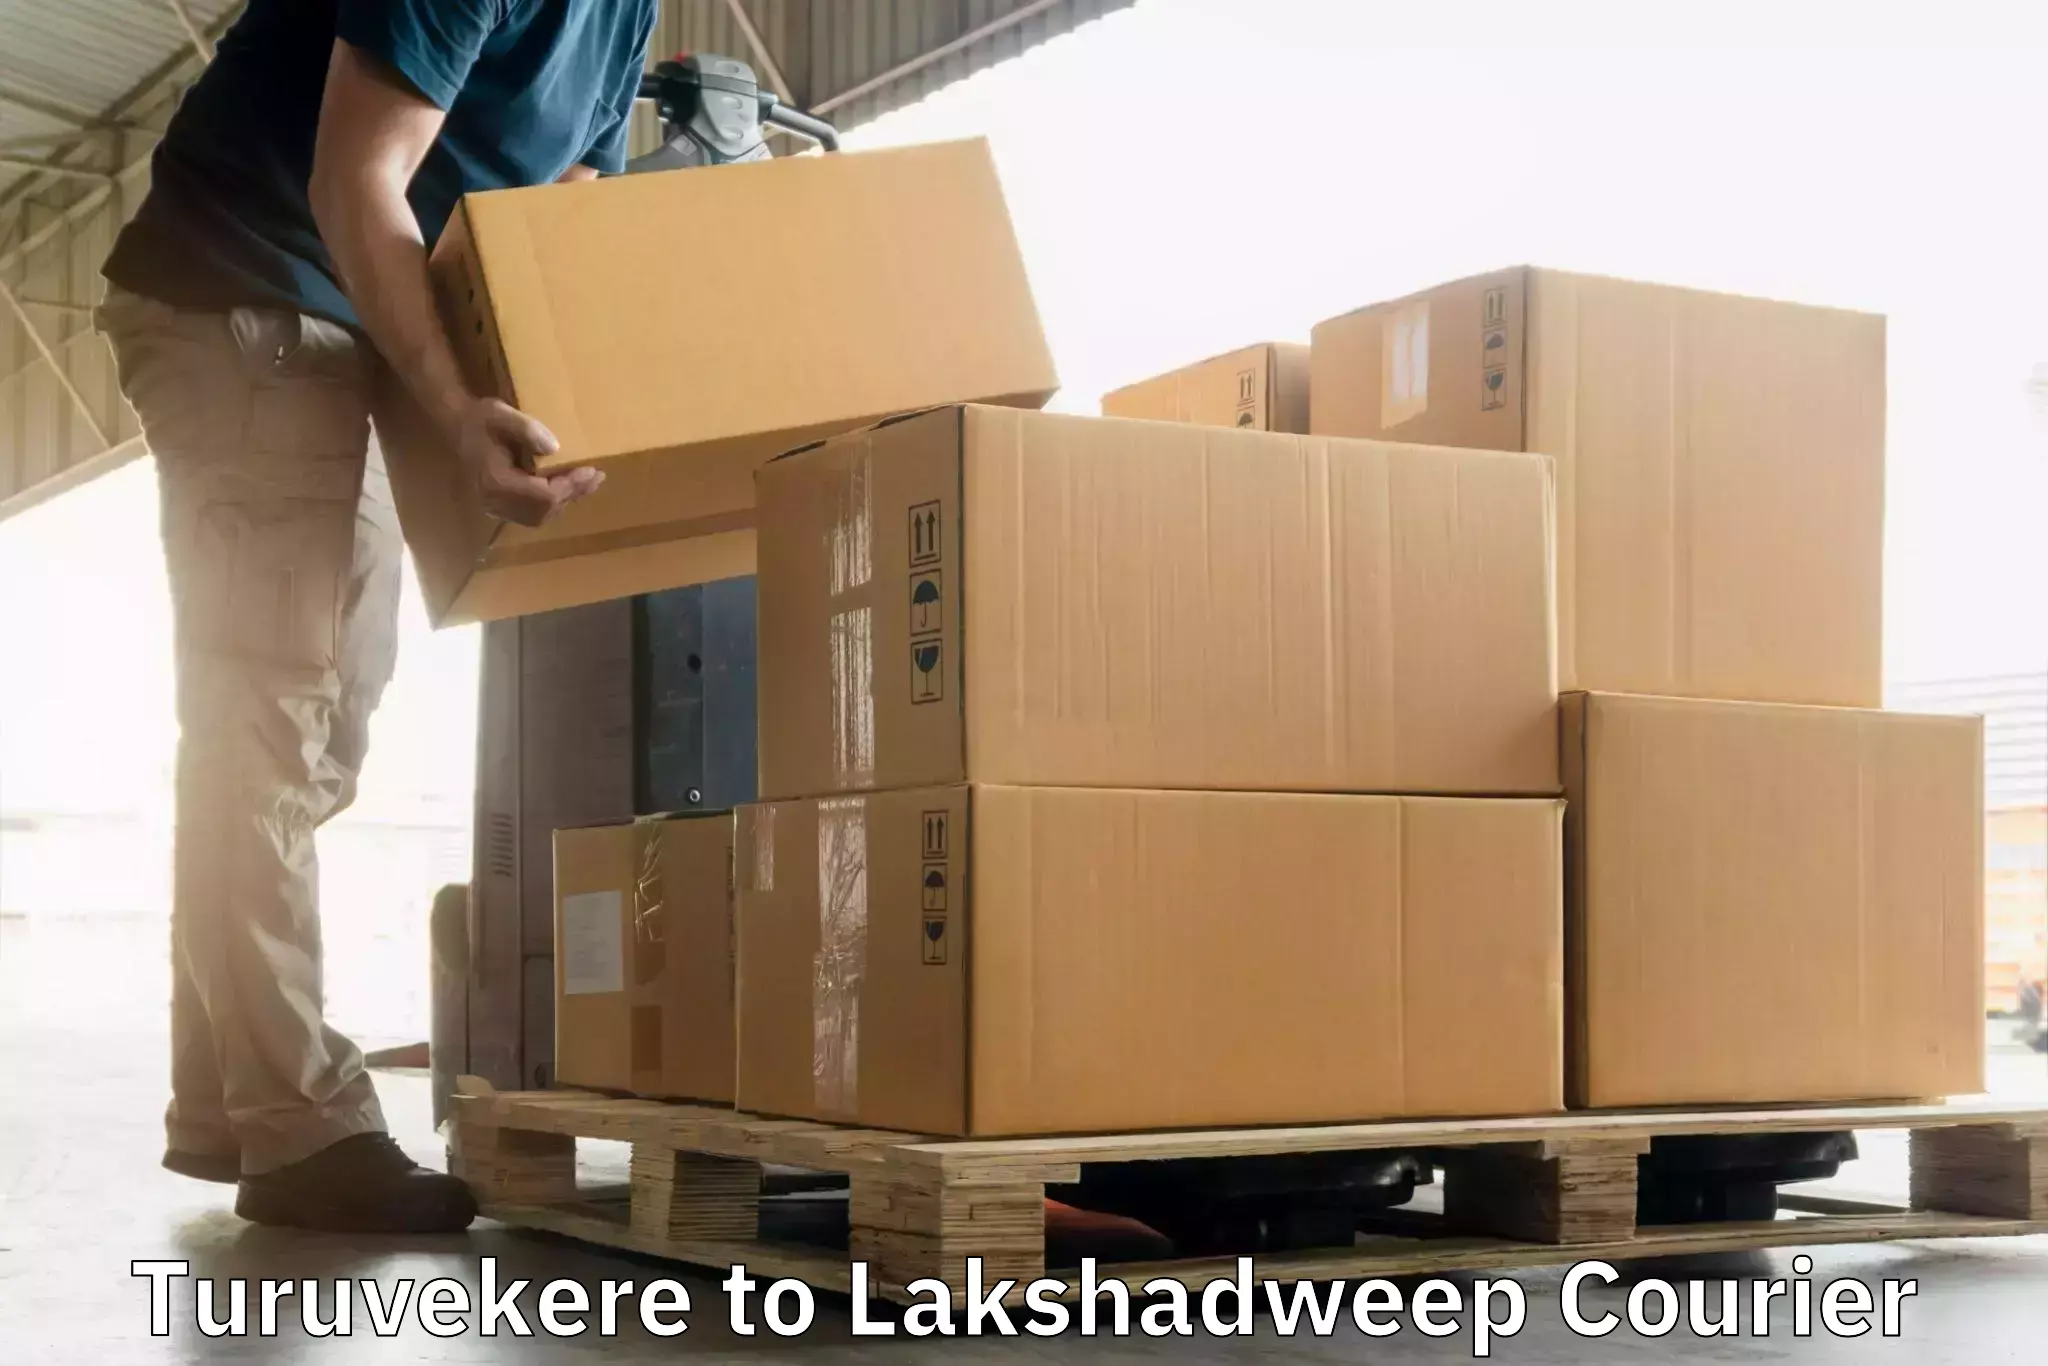 High-capacity parcel service Turuvekere to Lakshadweep